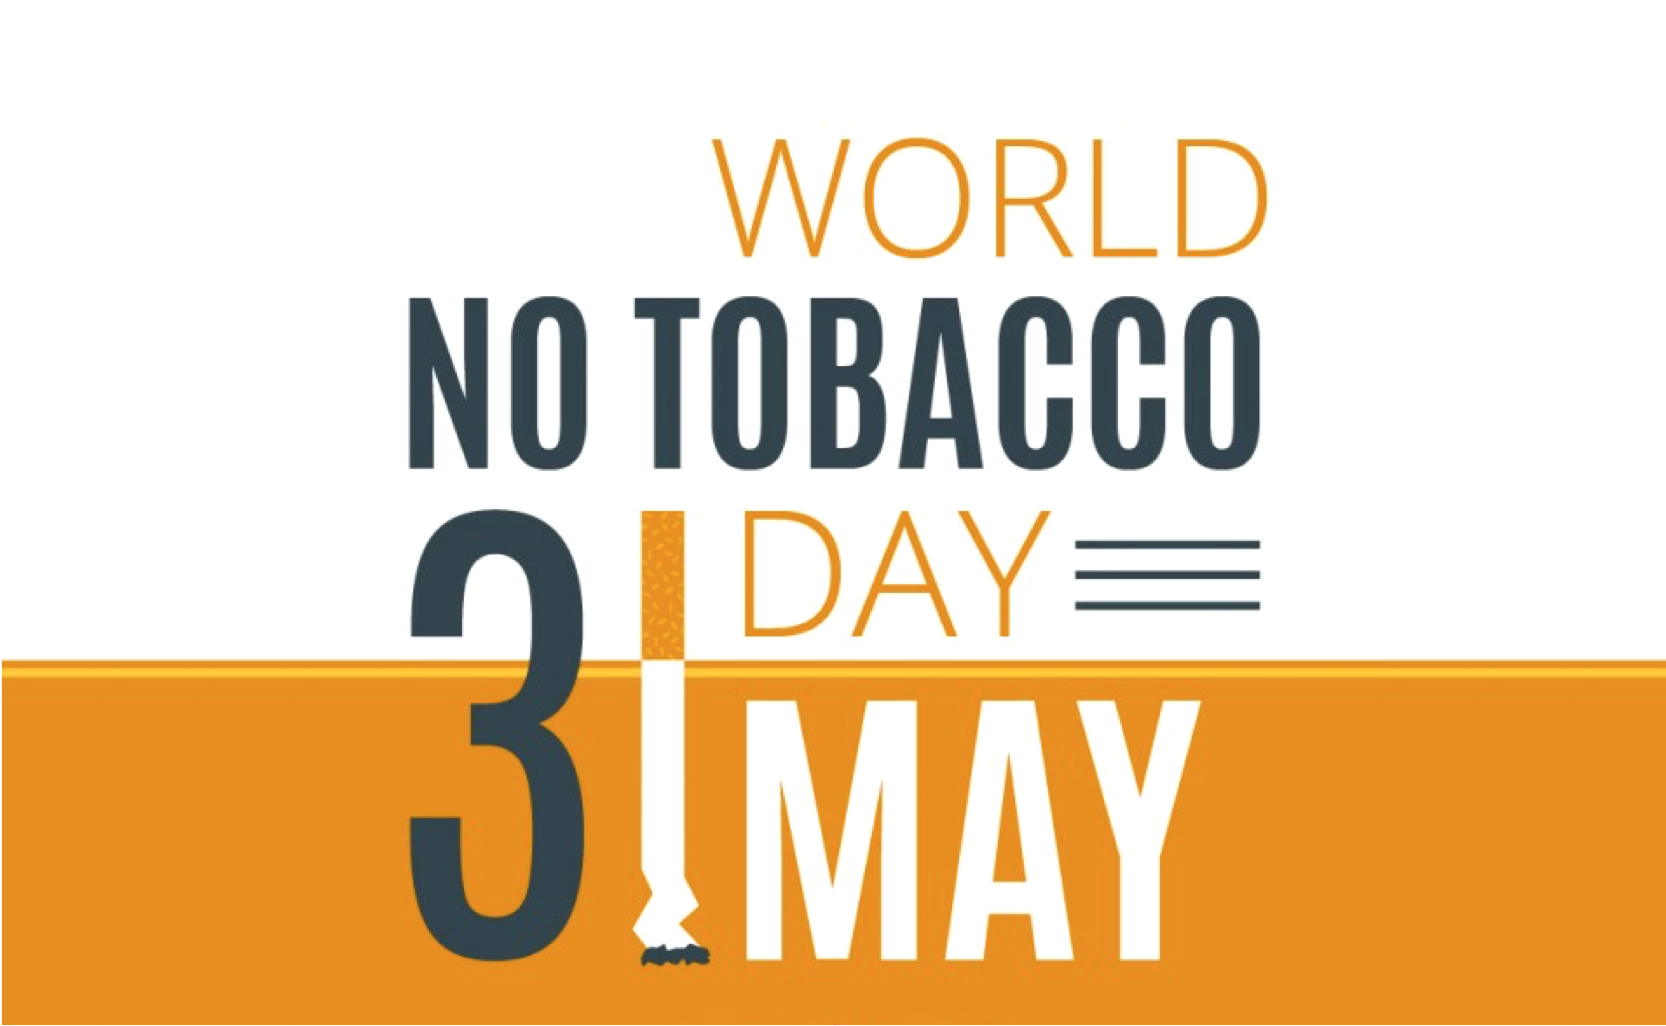 World No Tobacco Day 31st May